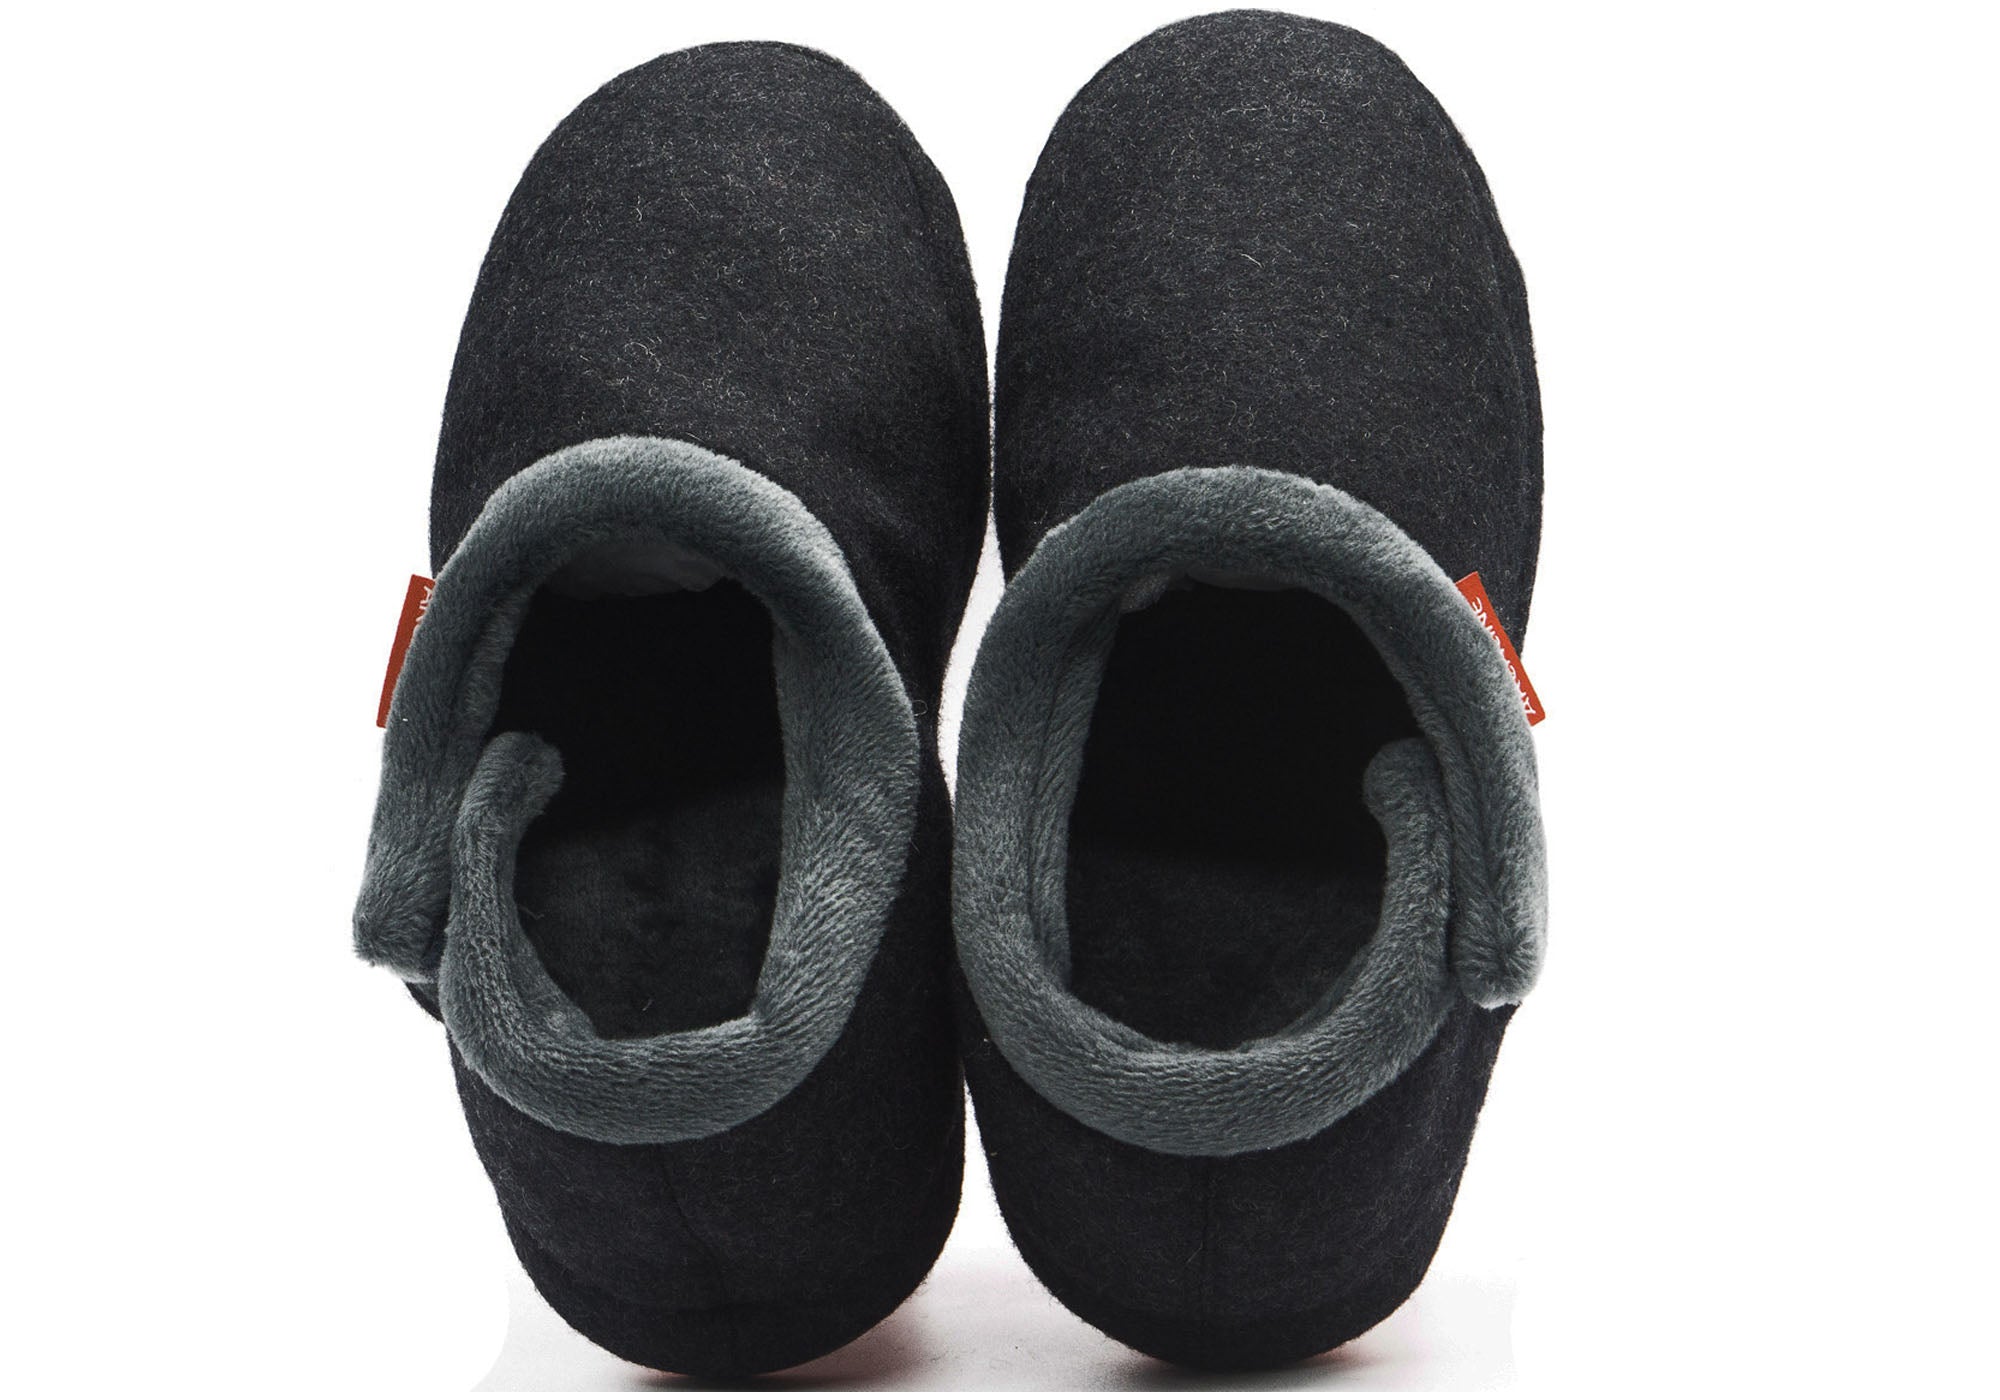 Archline 2018 Model Mens Closed Toe Comfort Orthotic Slippers | Brand ...